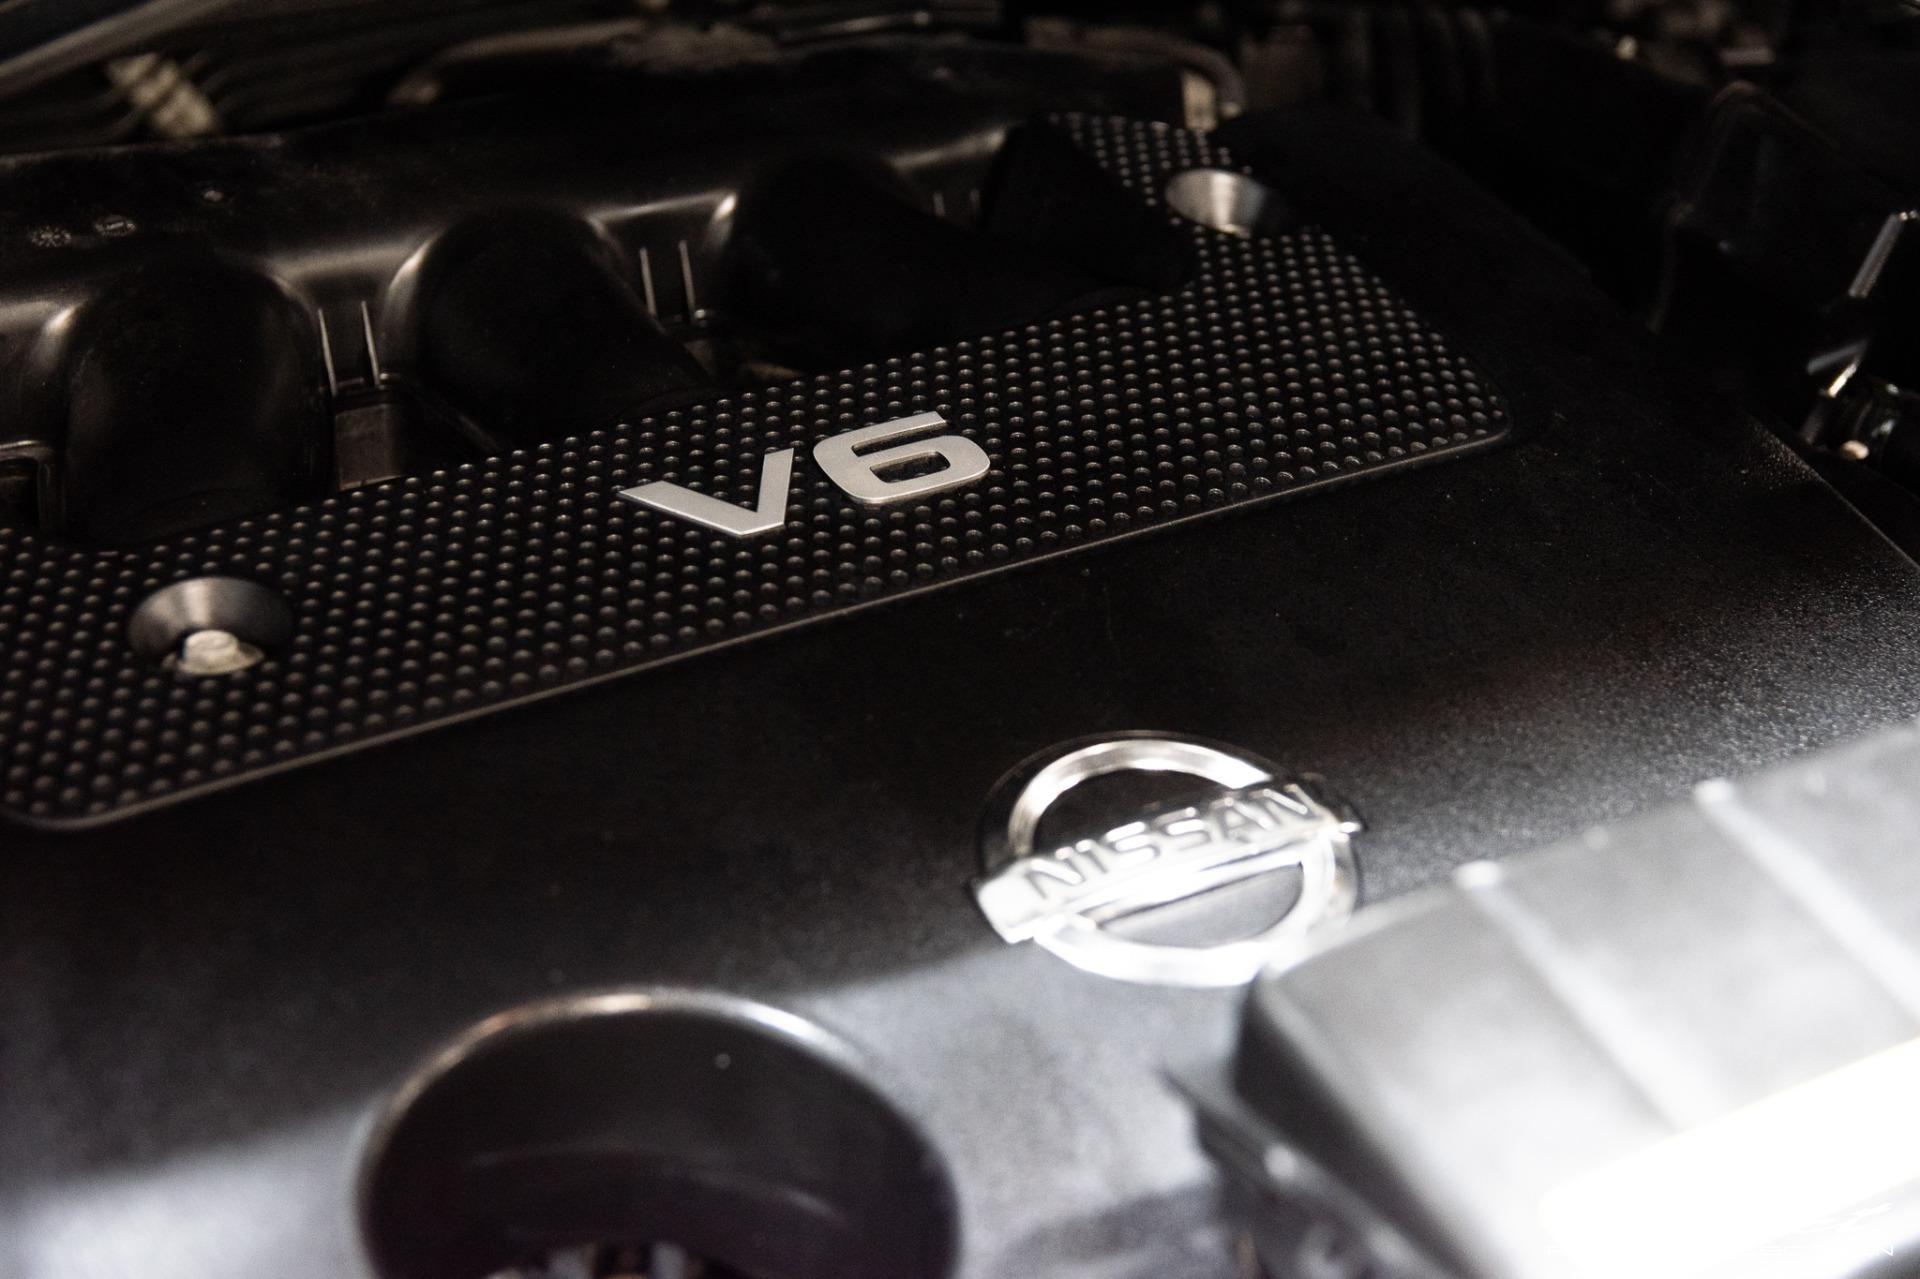 3.5L Engine For 2013 Nissan Quest, Vin A.